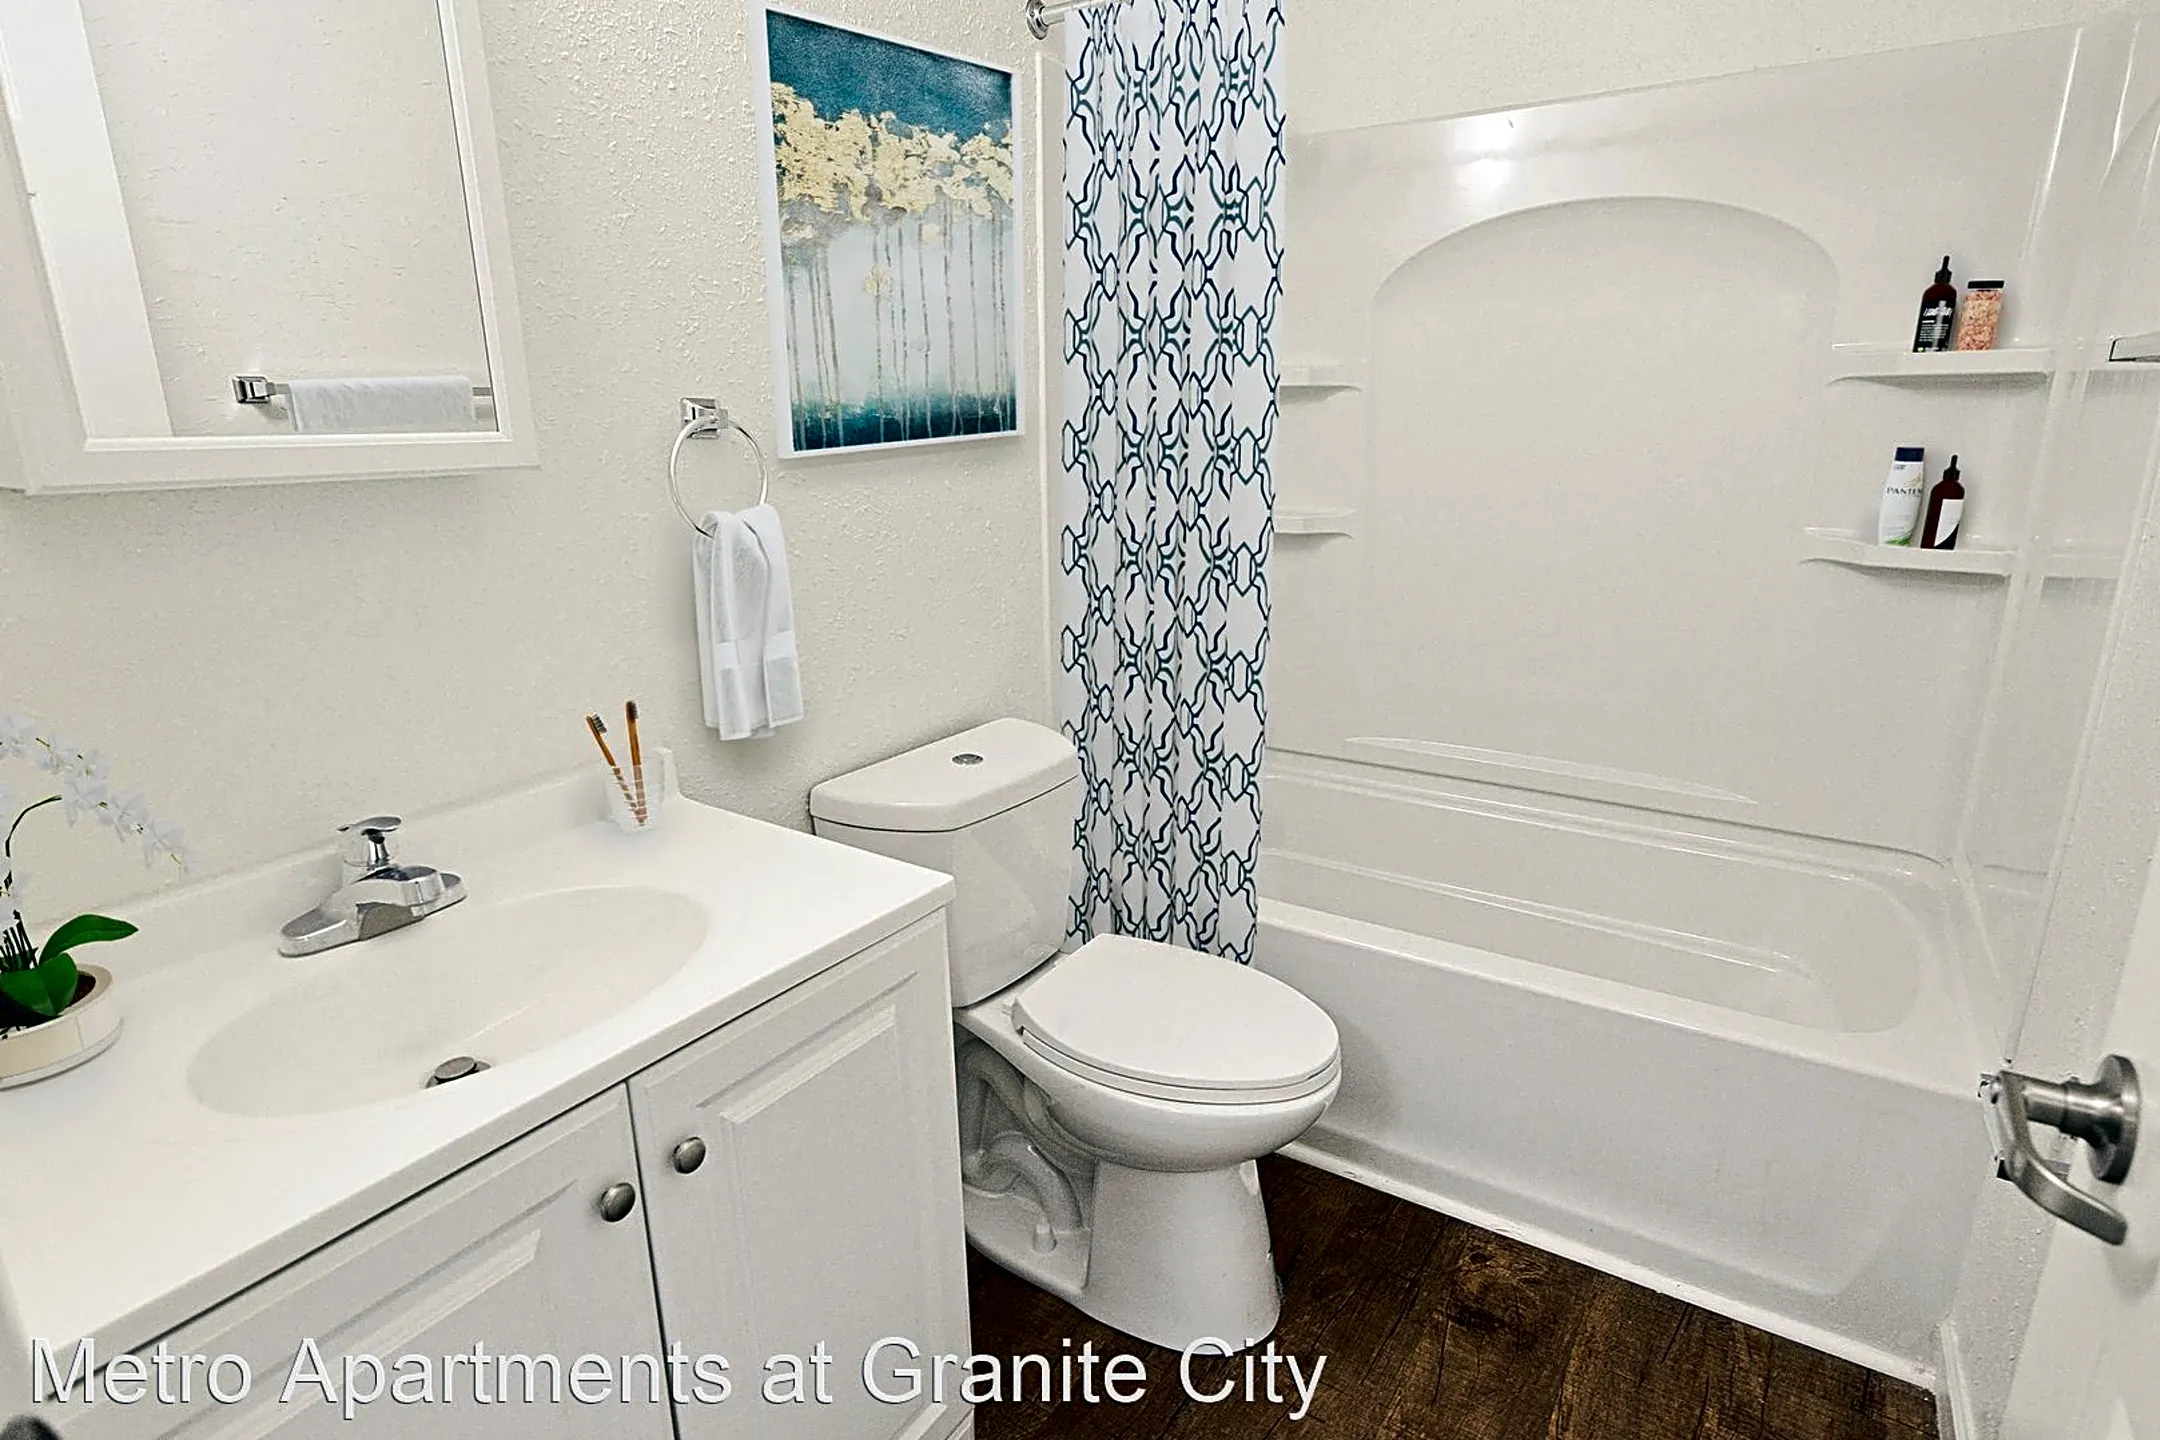 Bathroom - Metro Apartments at Granite City - Granite City, IL